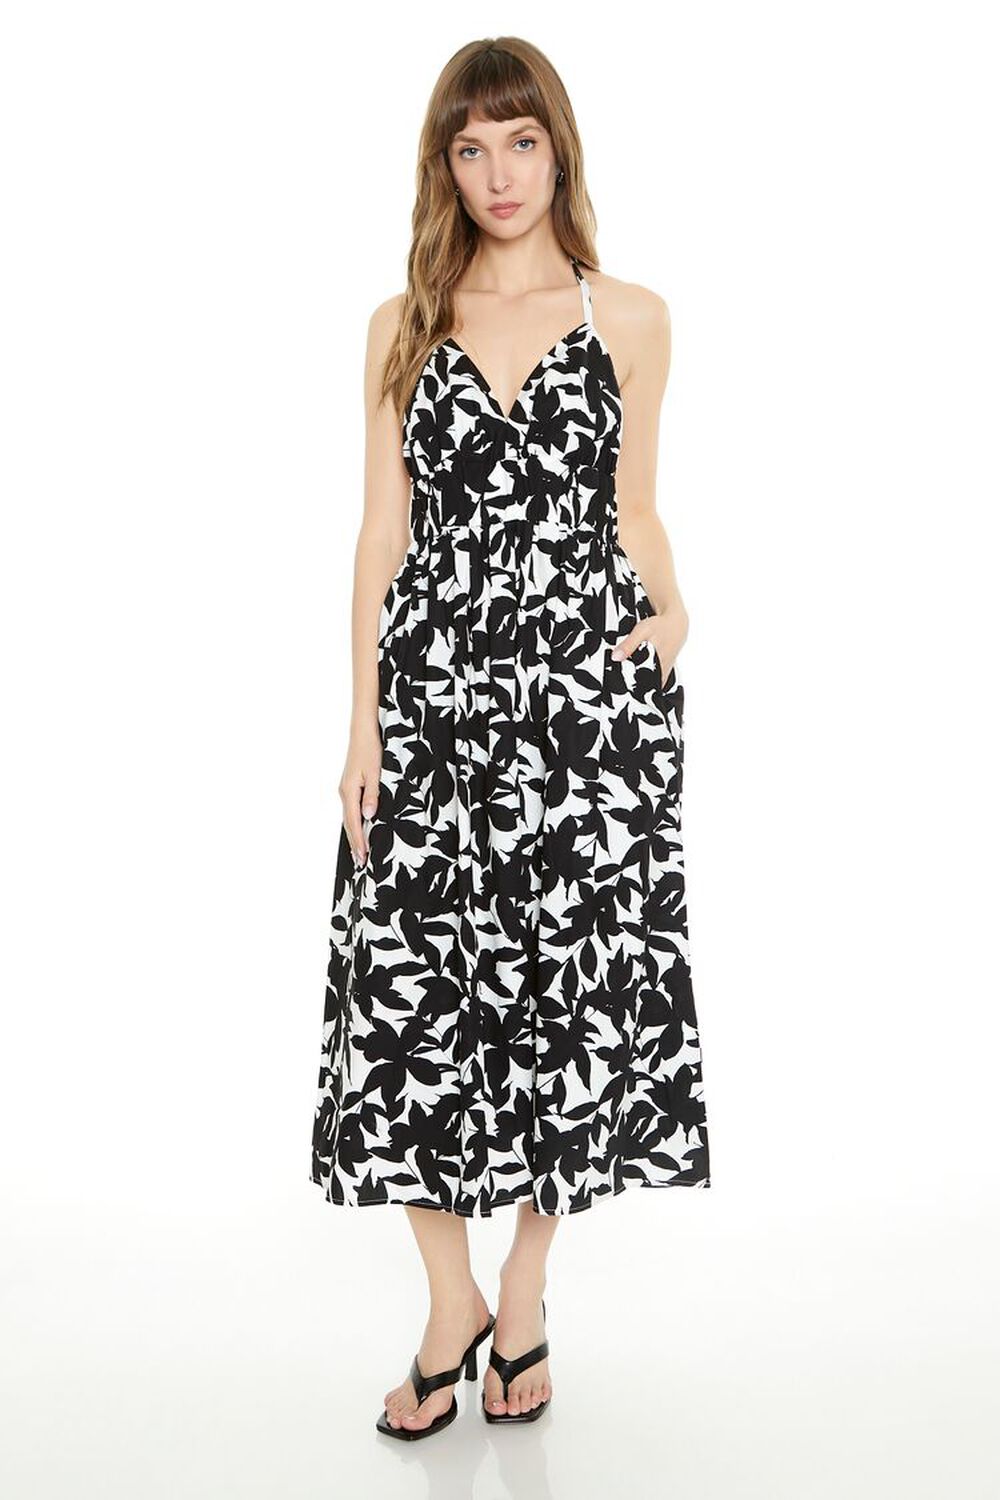 BLACK/WHITE Floral Print Halter Midi Dress, image 1